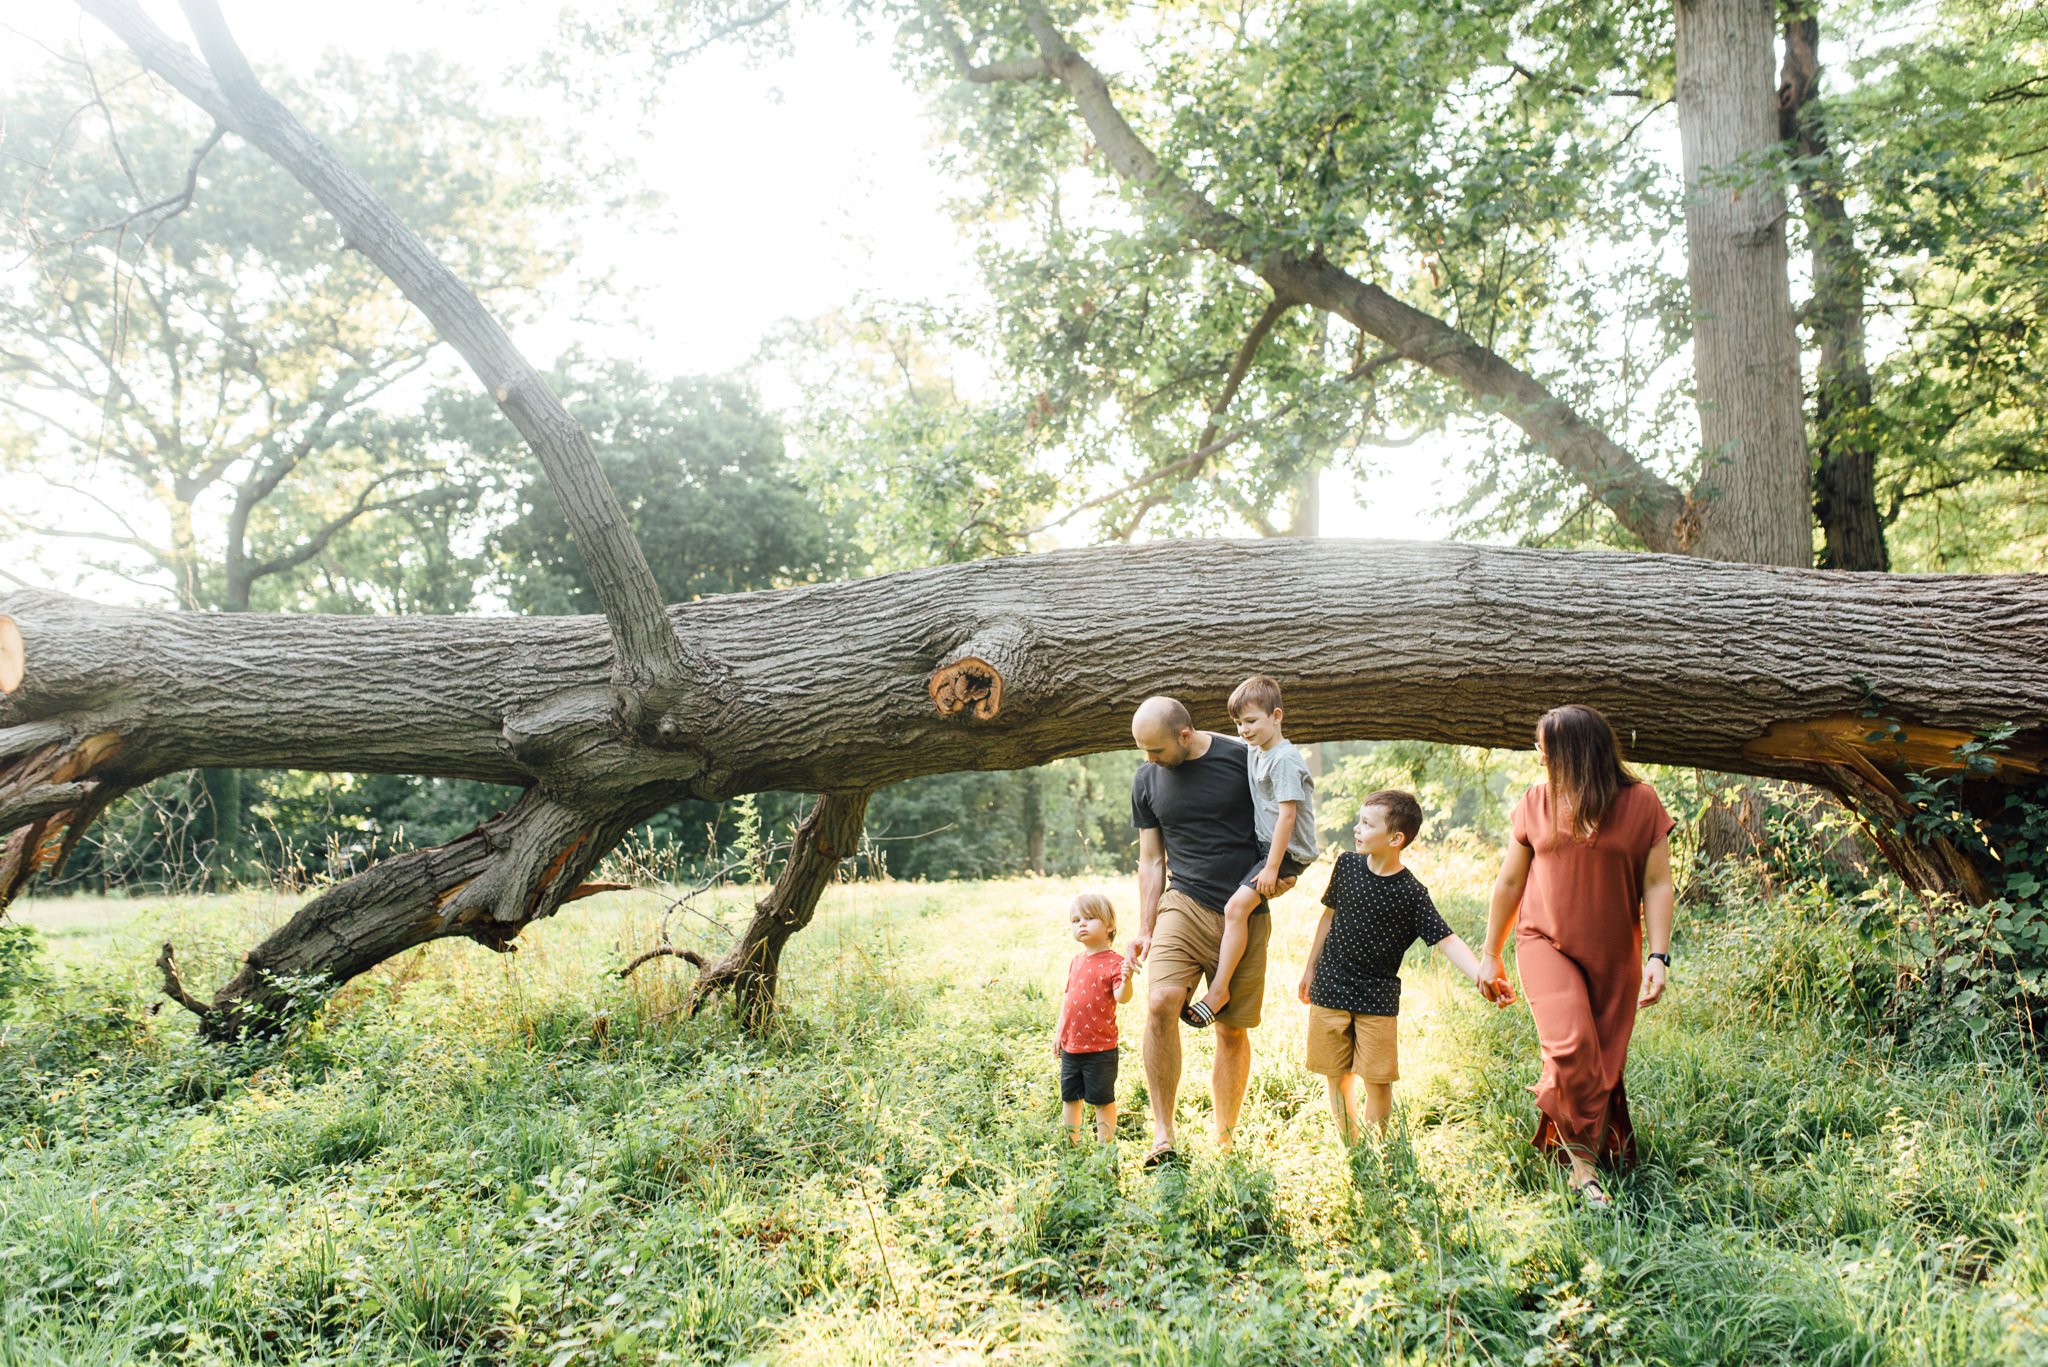 Kravets Family - Awbury Arboretum Family Session - Philadelphia Family Photographer - Alison Dunn Photography photo